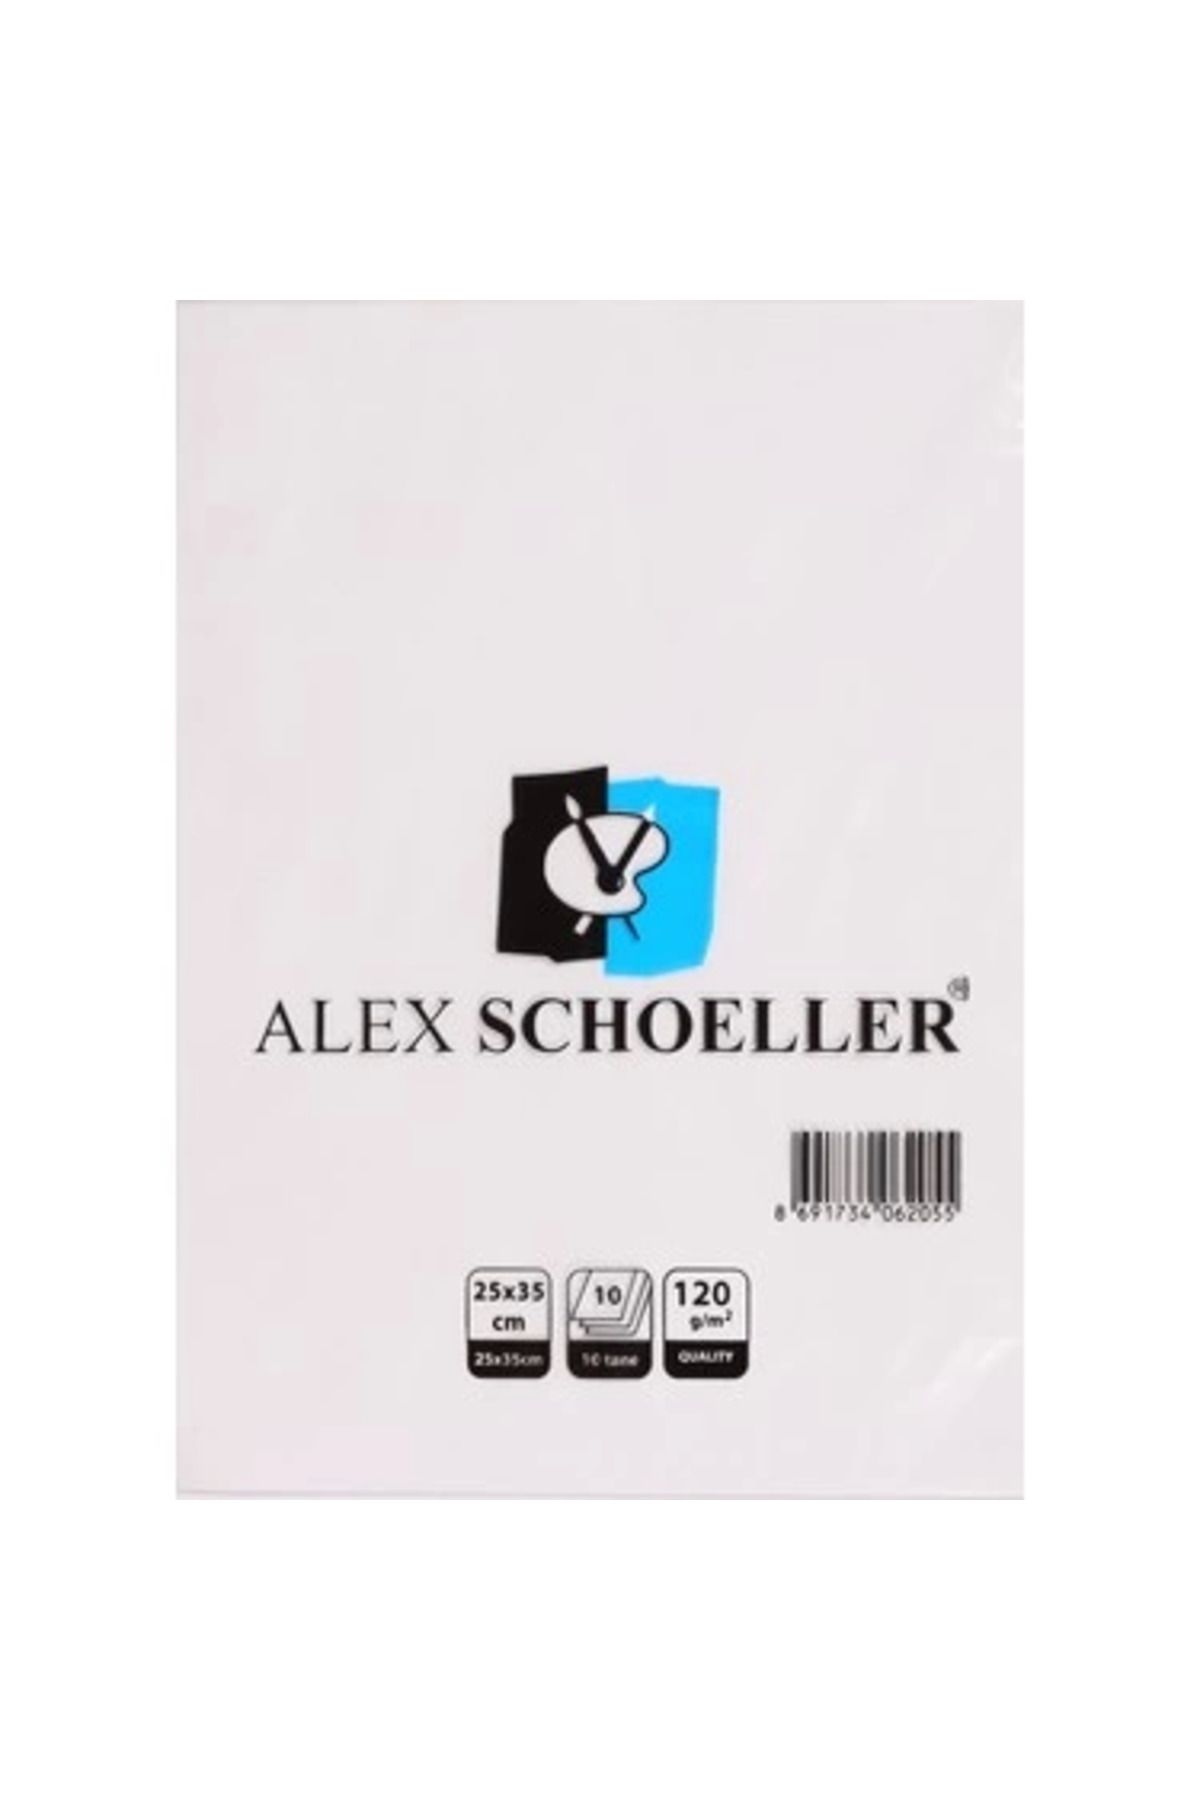 Schoellershammer ALEX ALX-9814 RESİM KAĞIDI 25x35 120gr 10LU POŞET (120.25)